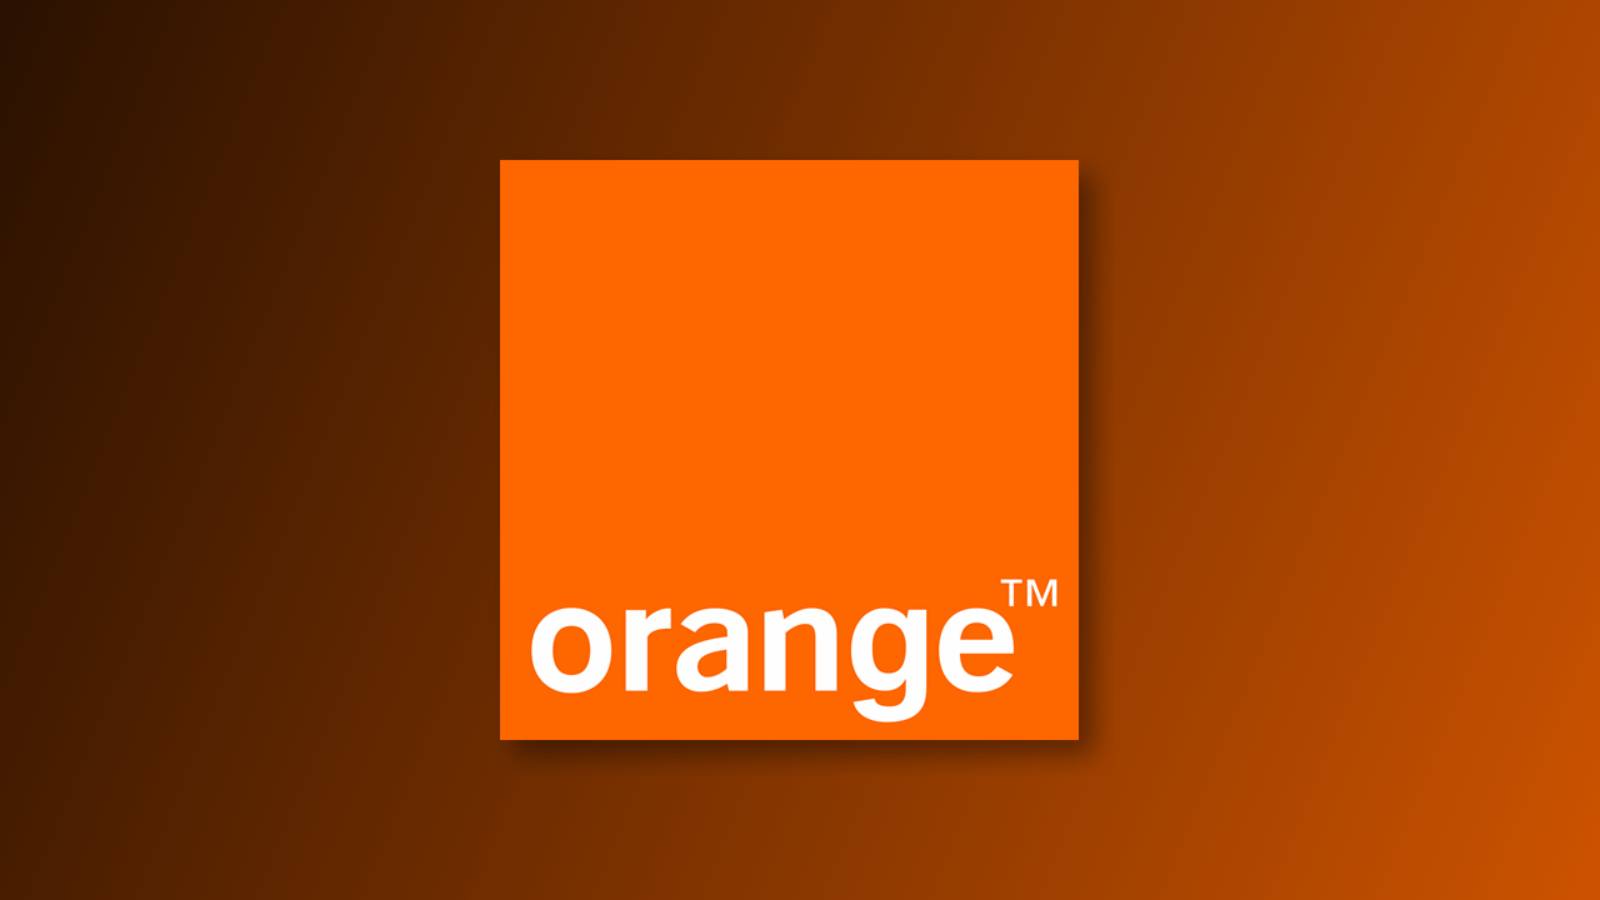 Orange antena